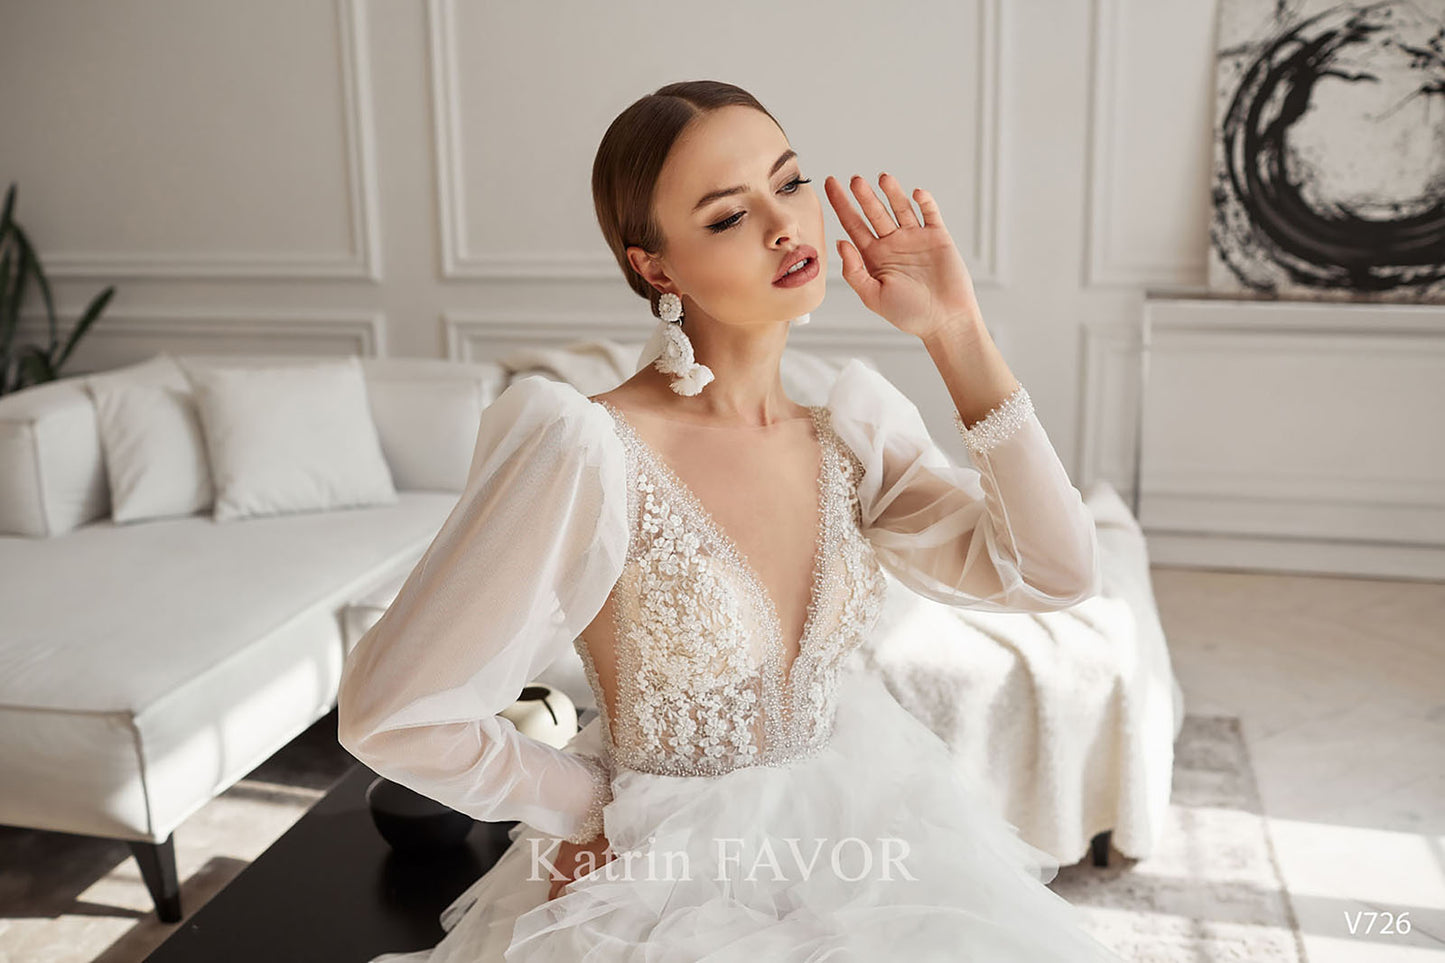 KatrinFAVORboutique-Tiered skirt 2 in 1 wedding dress